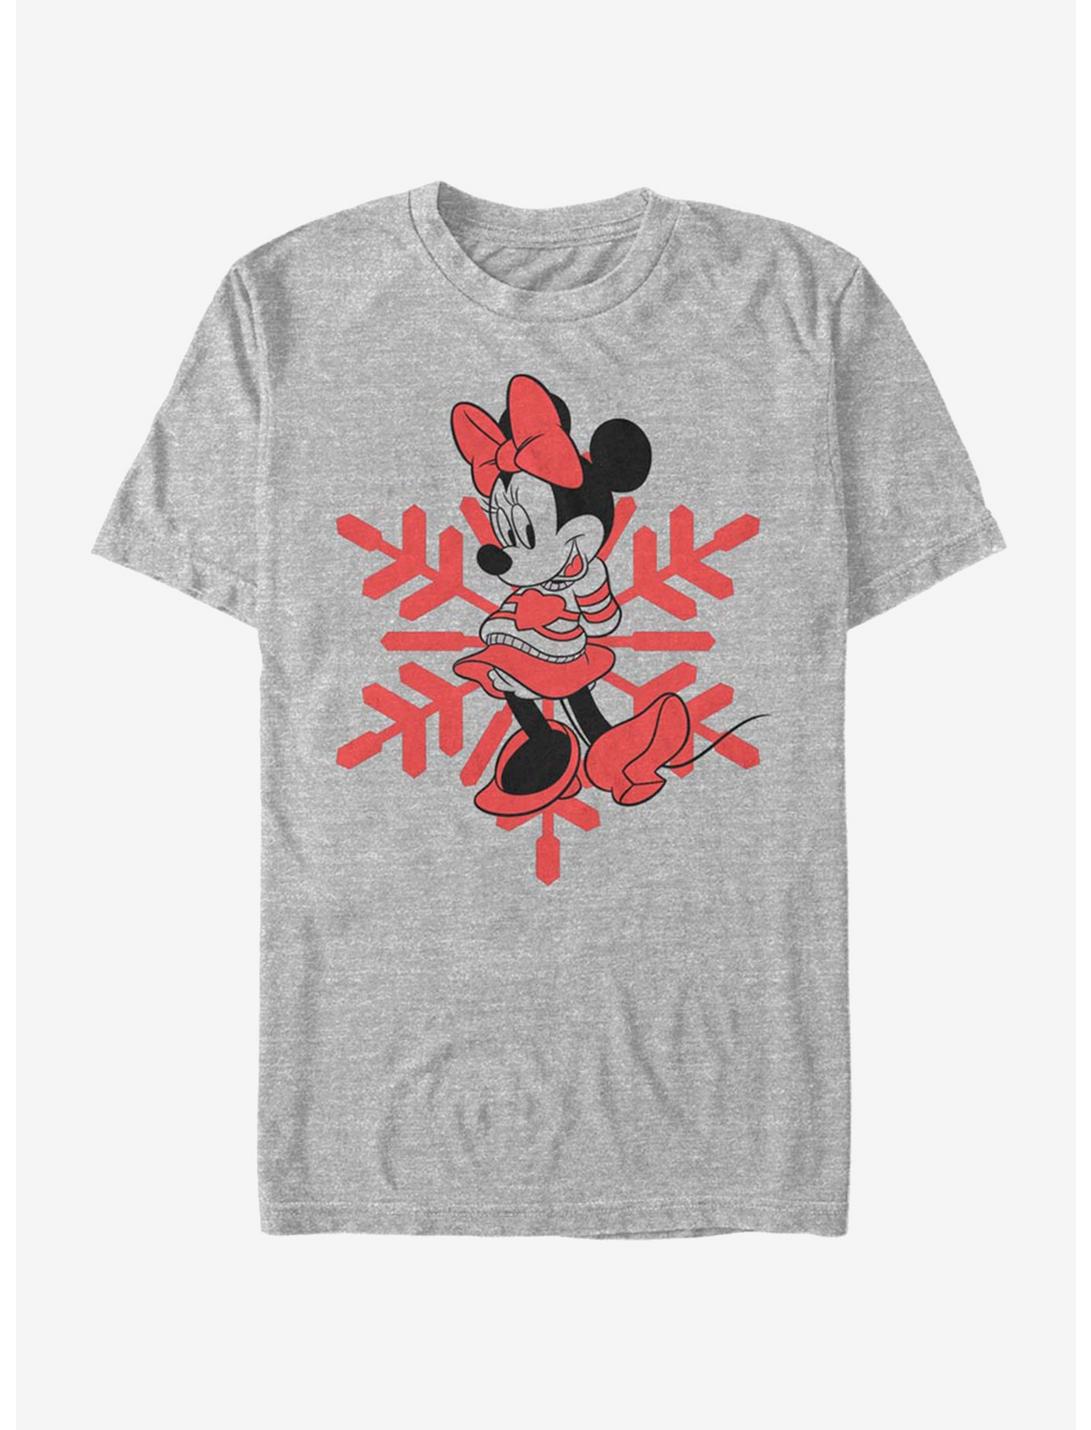 Disney Minnie Mouse Holiday Snowflake T-Shirt, ATH HTR, hi-res